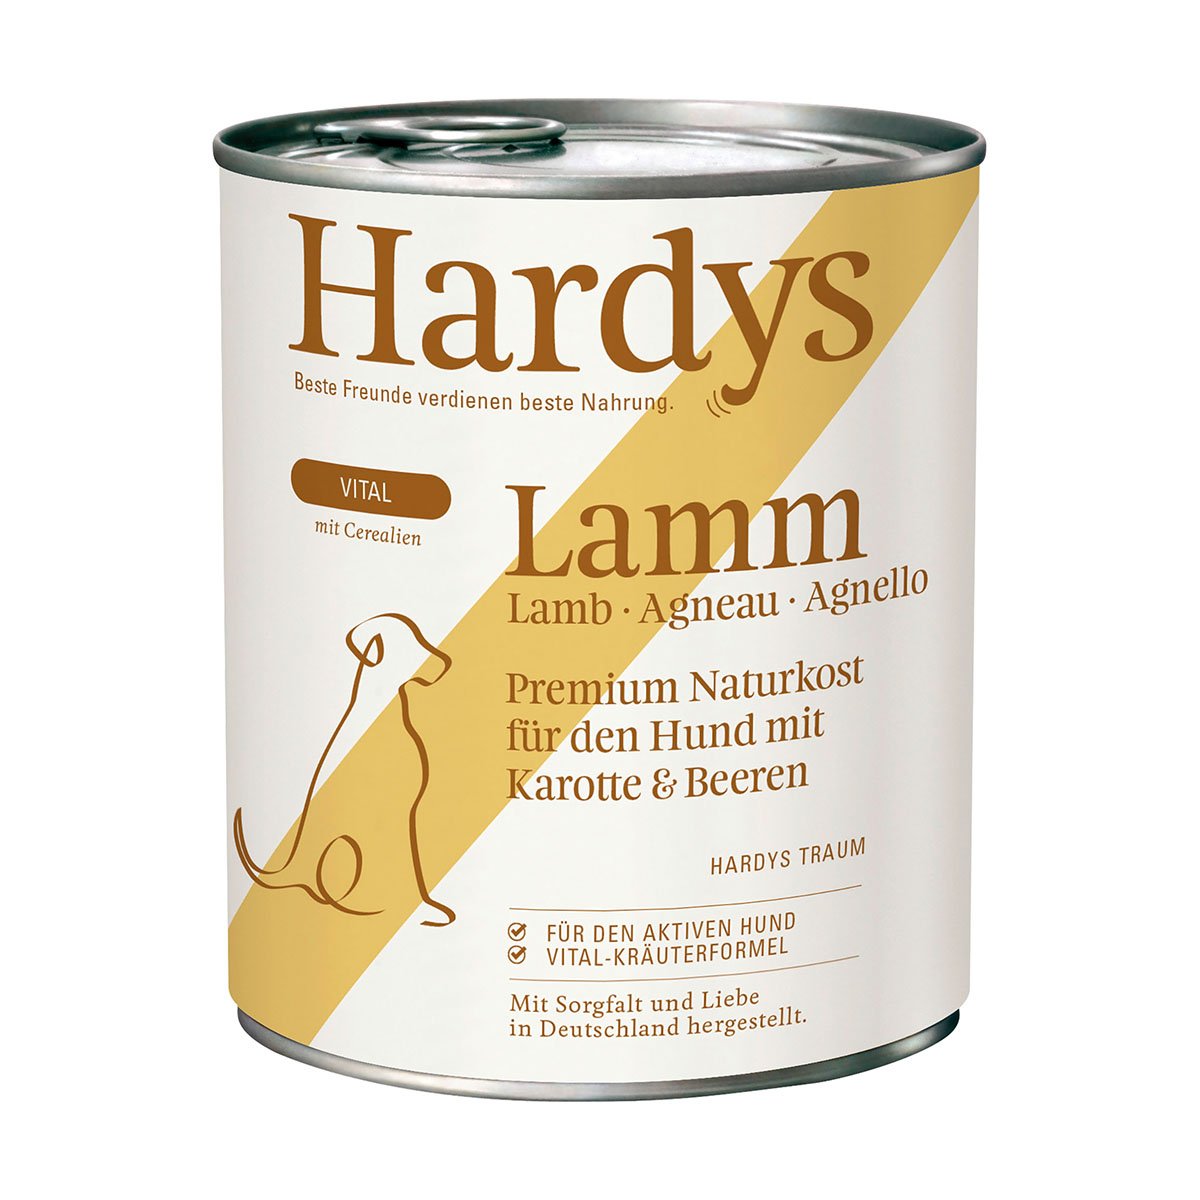 Hardys VITAL Lamm mit Karotte & Beeren 12x800g von Hardys